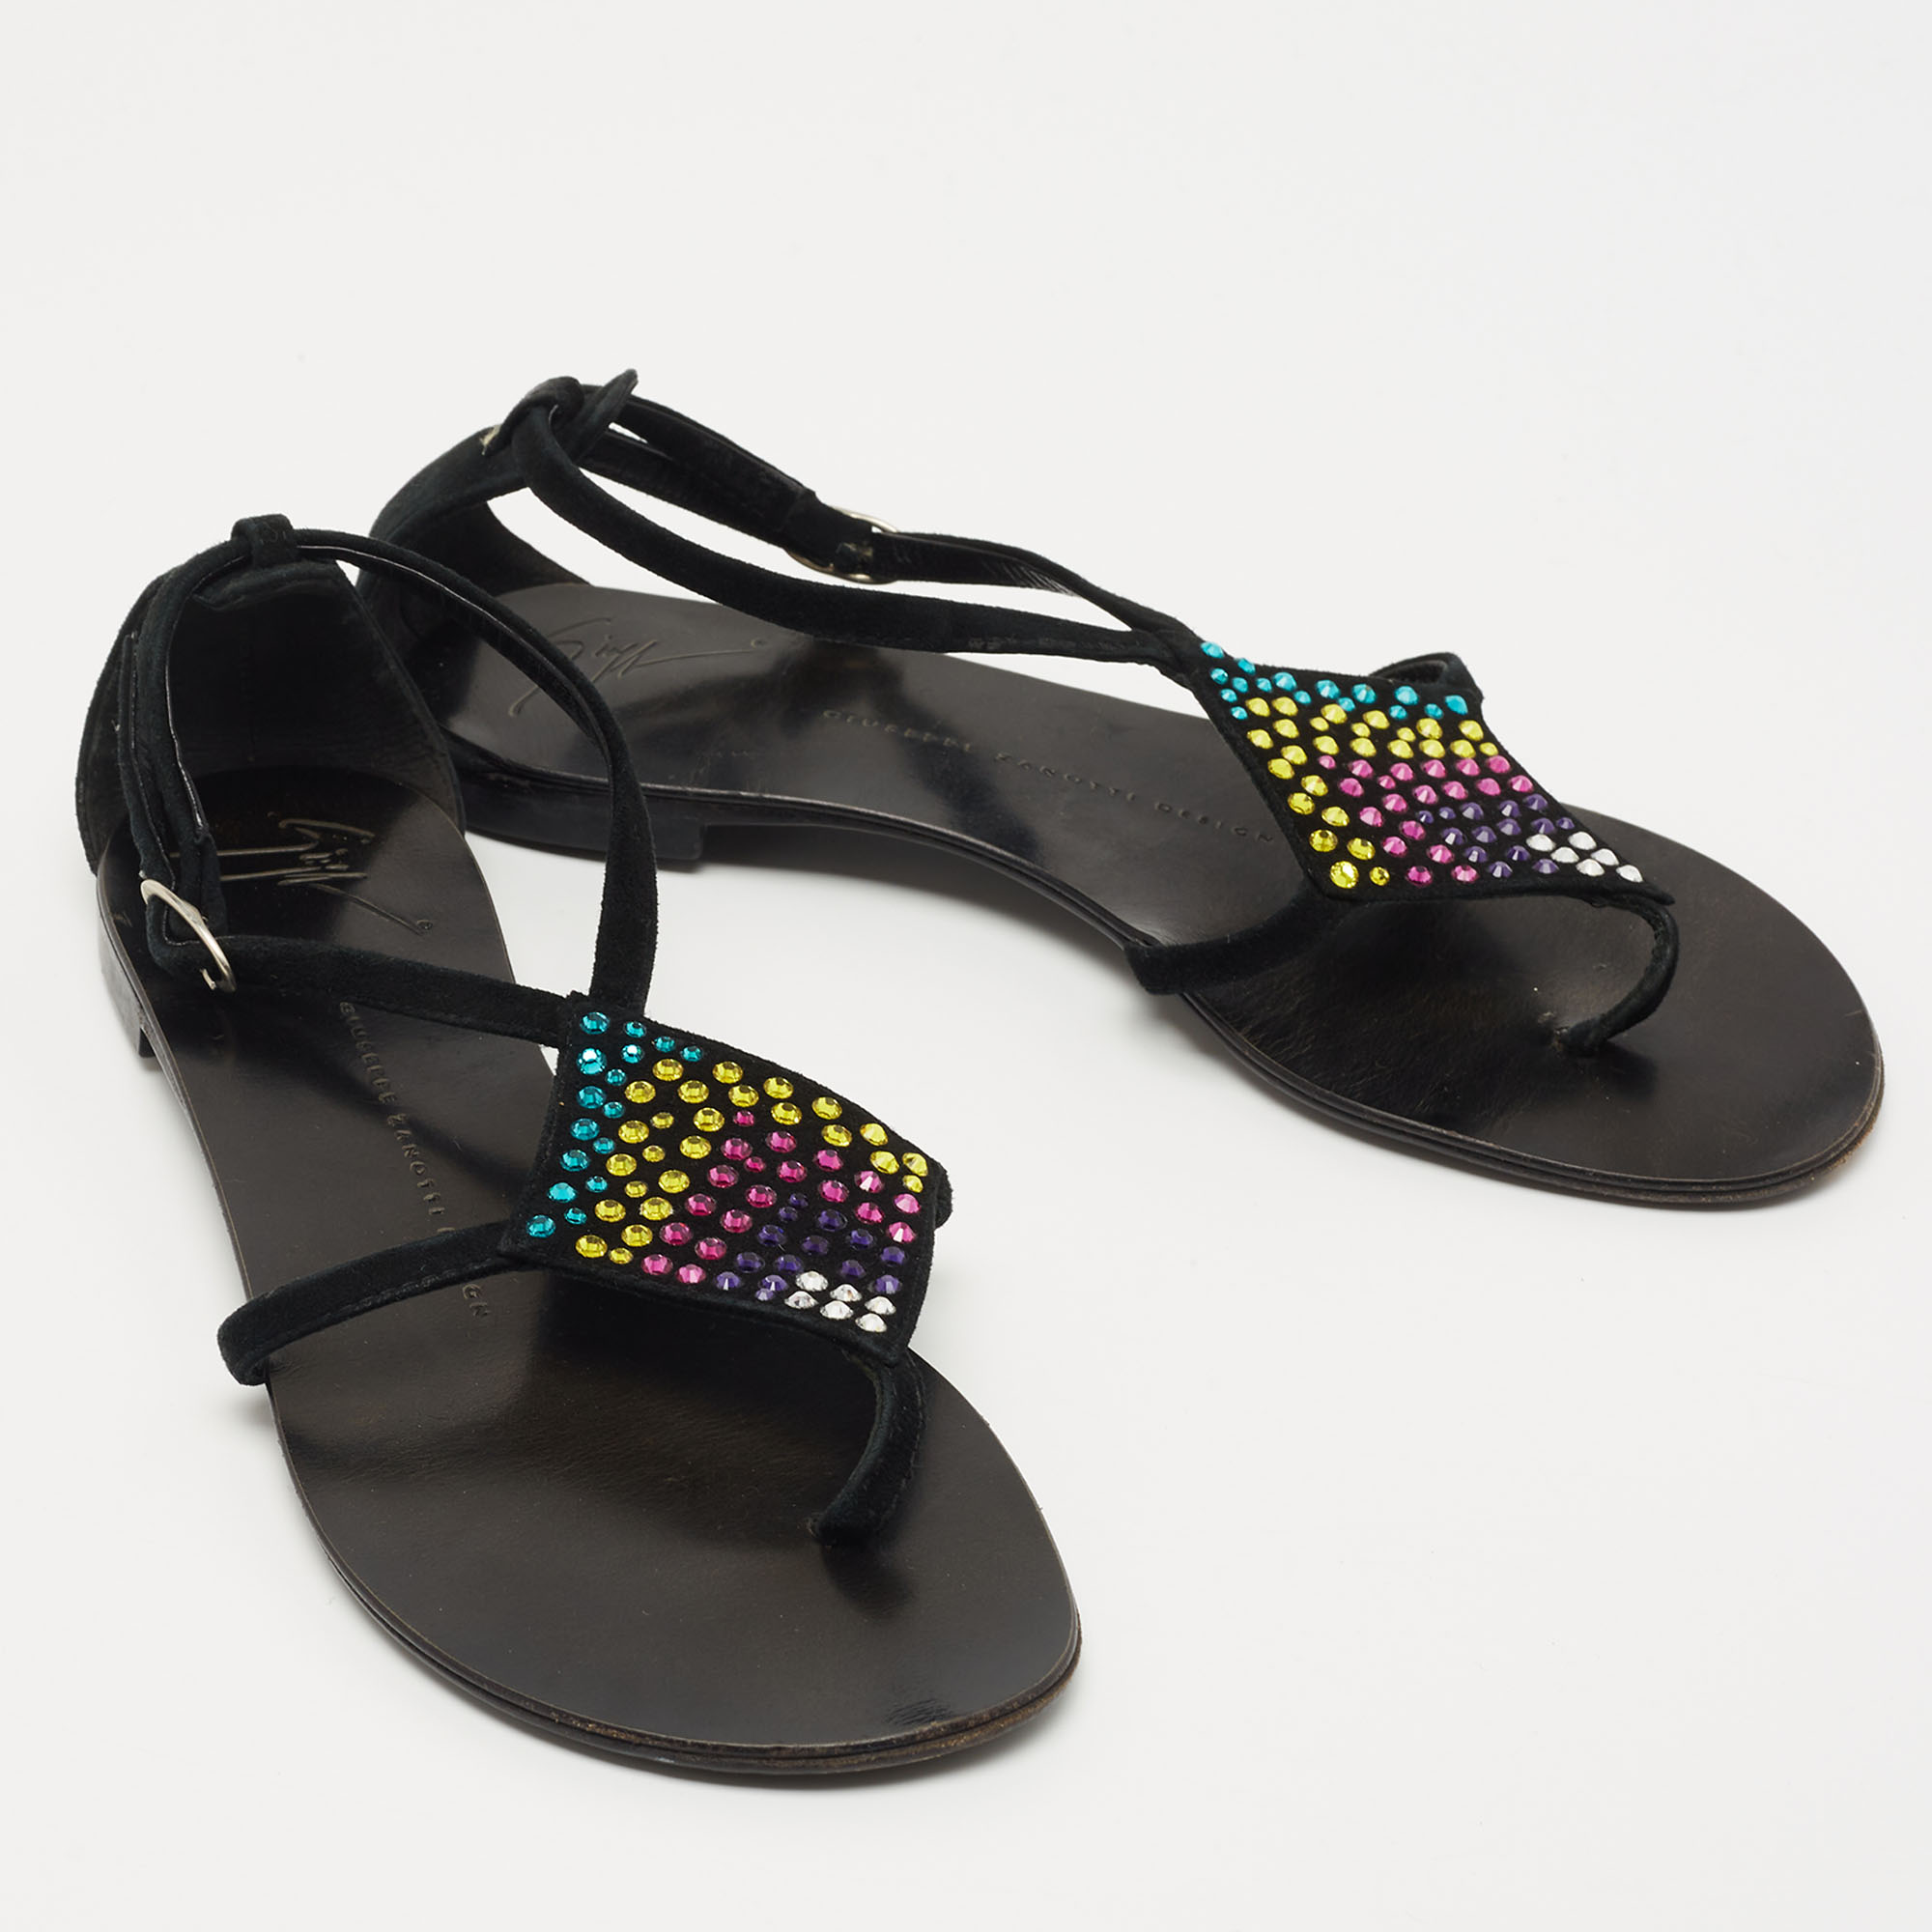 Giuseppe Zanotti Black Suede Crystal Embellished Thong Flat Sandals Size 36